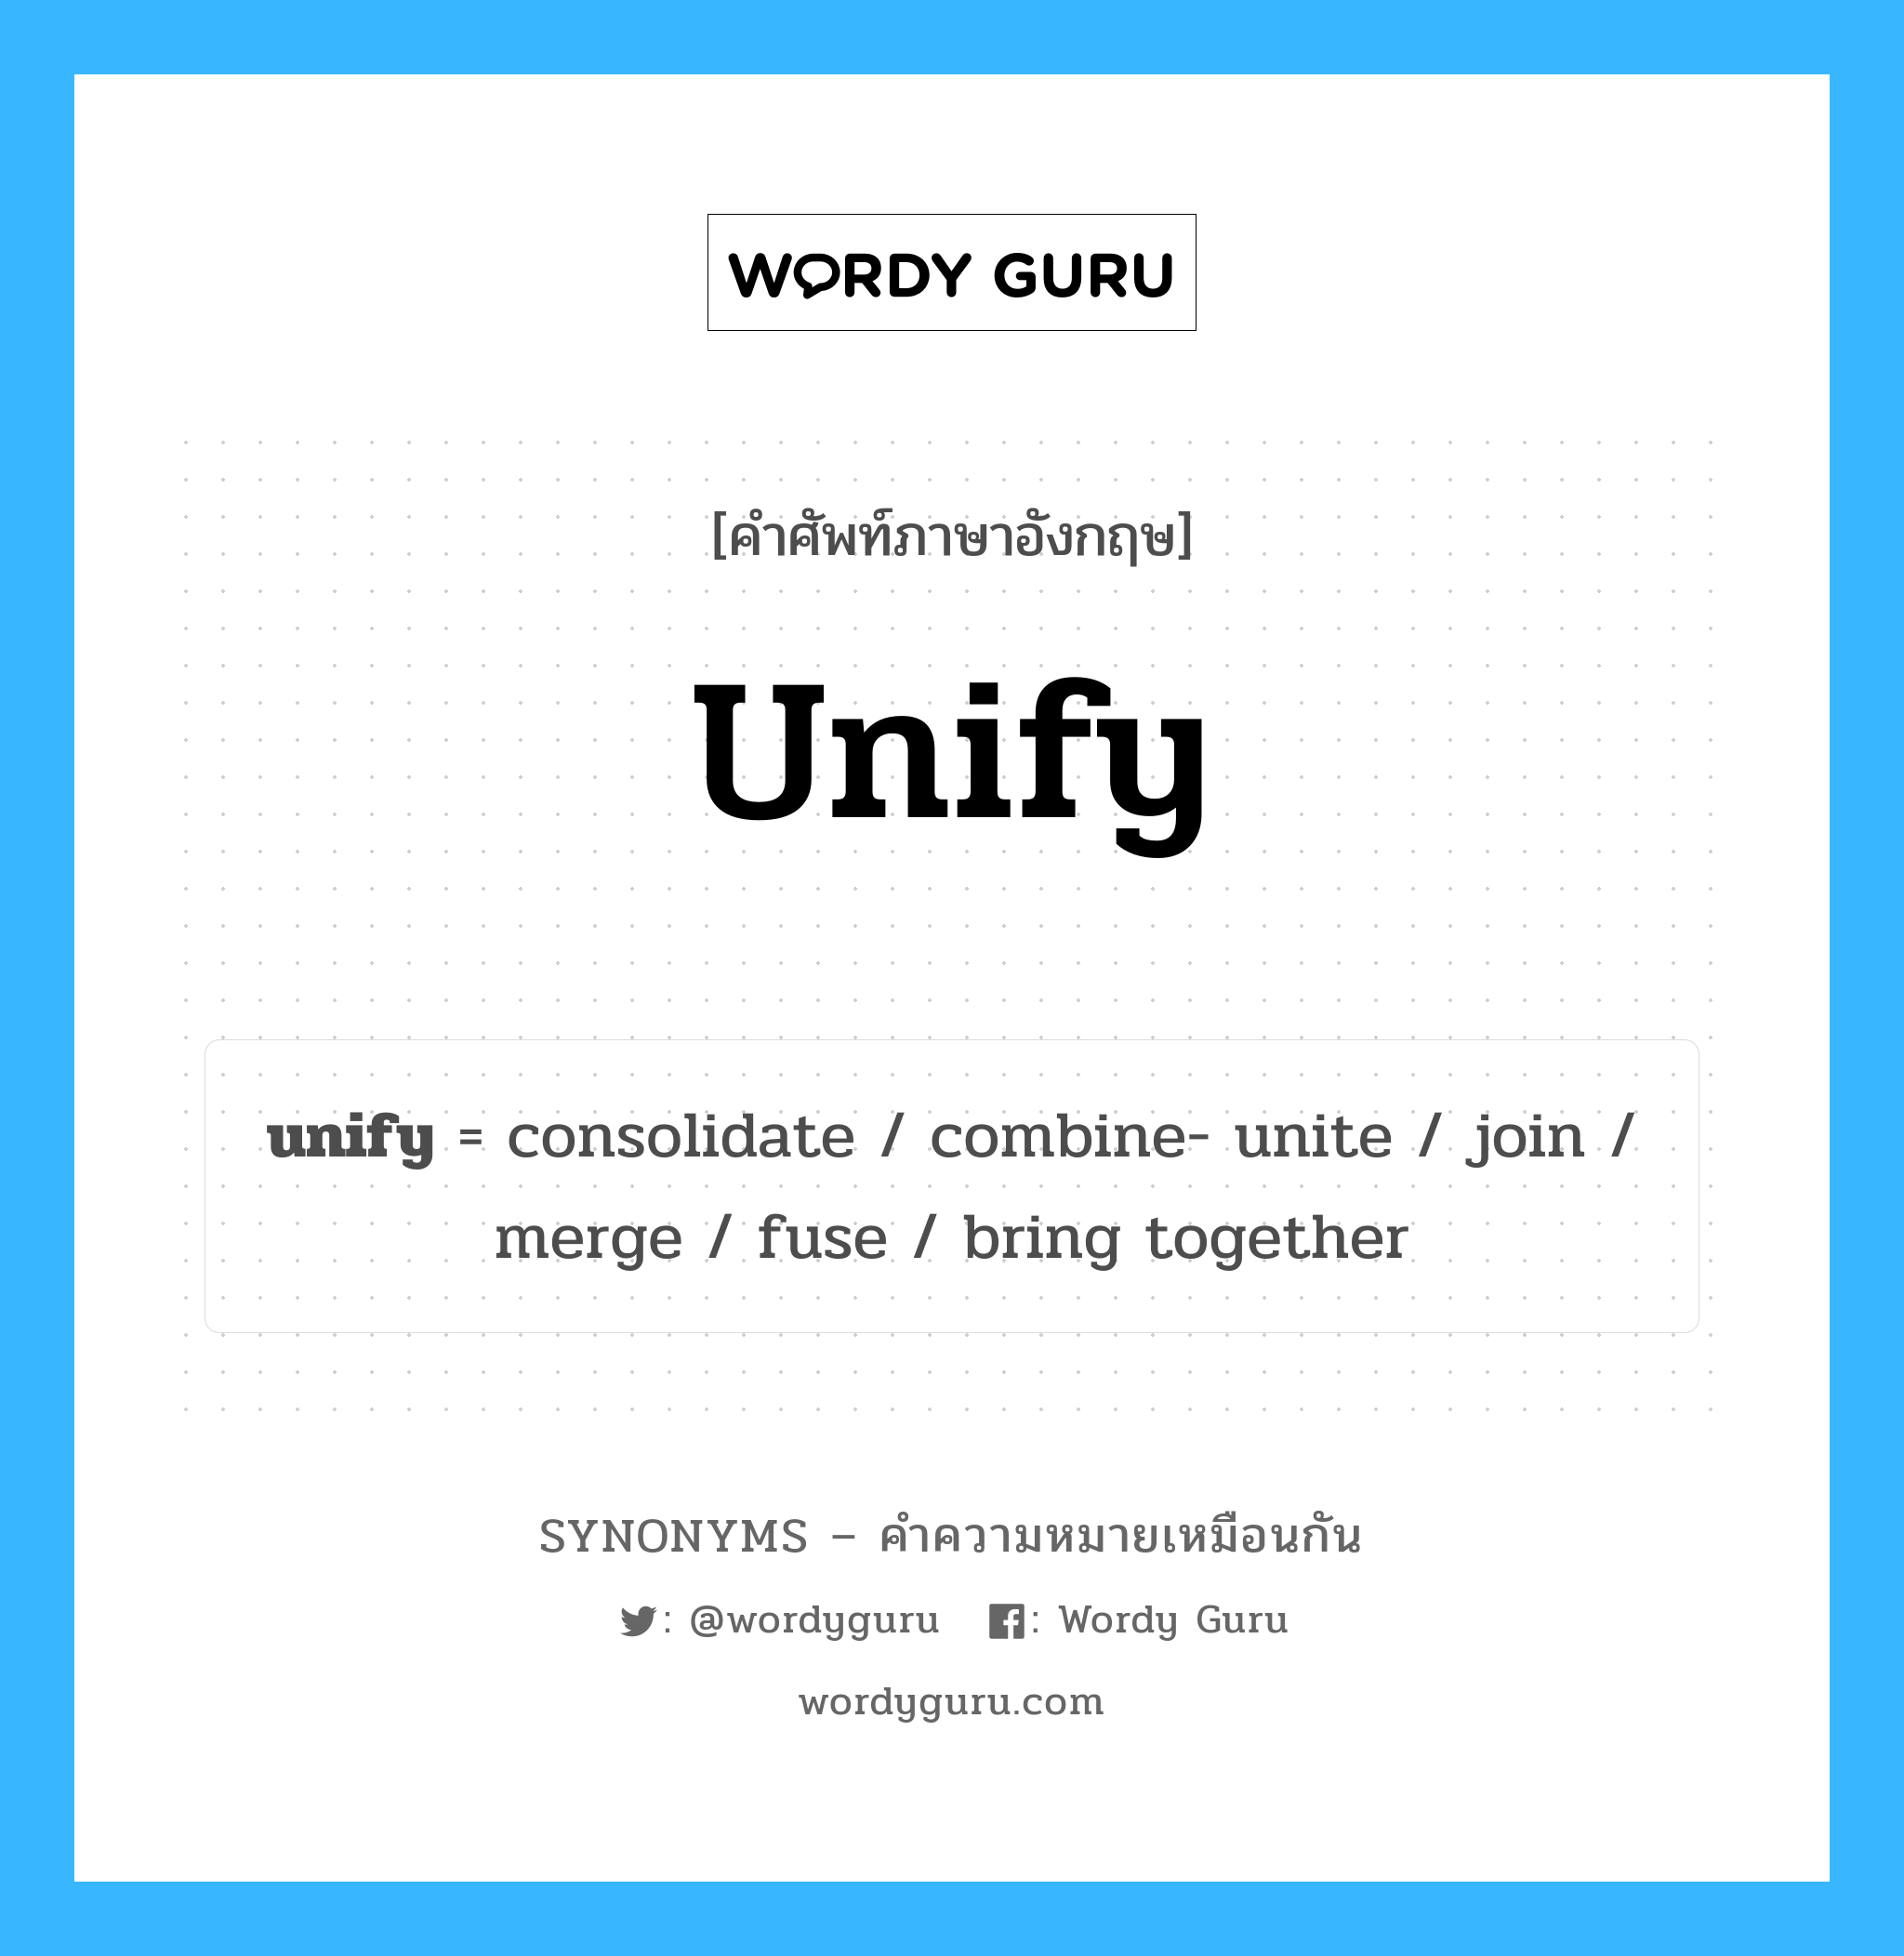 fuse เป็นหนึ่งใน unify และมีคำอื่น ๆ อีกดังนี้, คำศัพท์ภาษาอังกฤษ fuse ความหมายคล้ายกันกับ unify แปลว่า ฟิวส์ หมวด unify